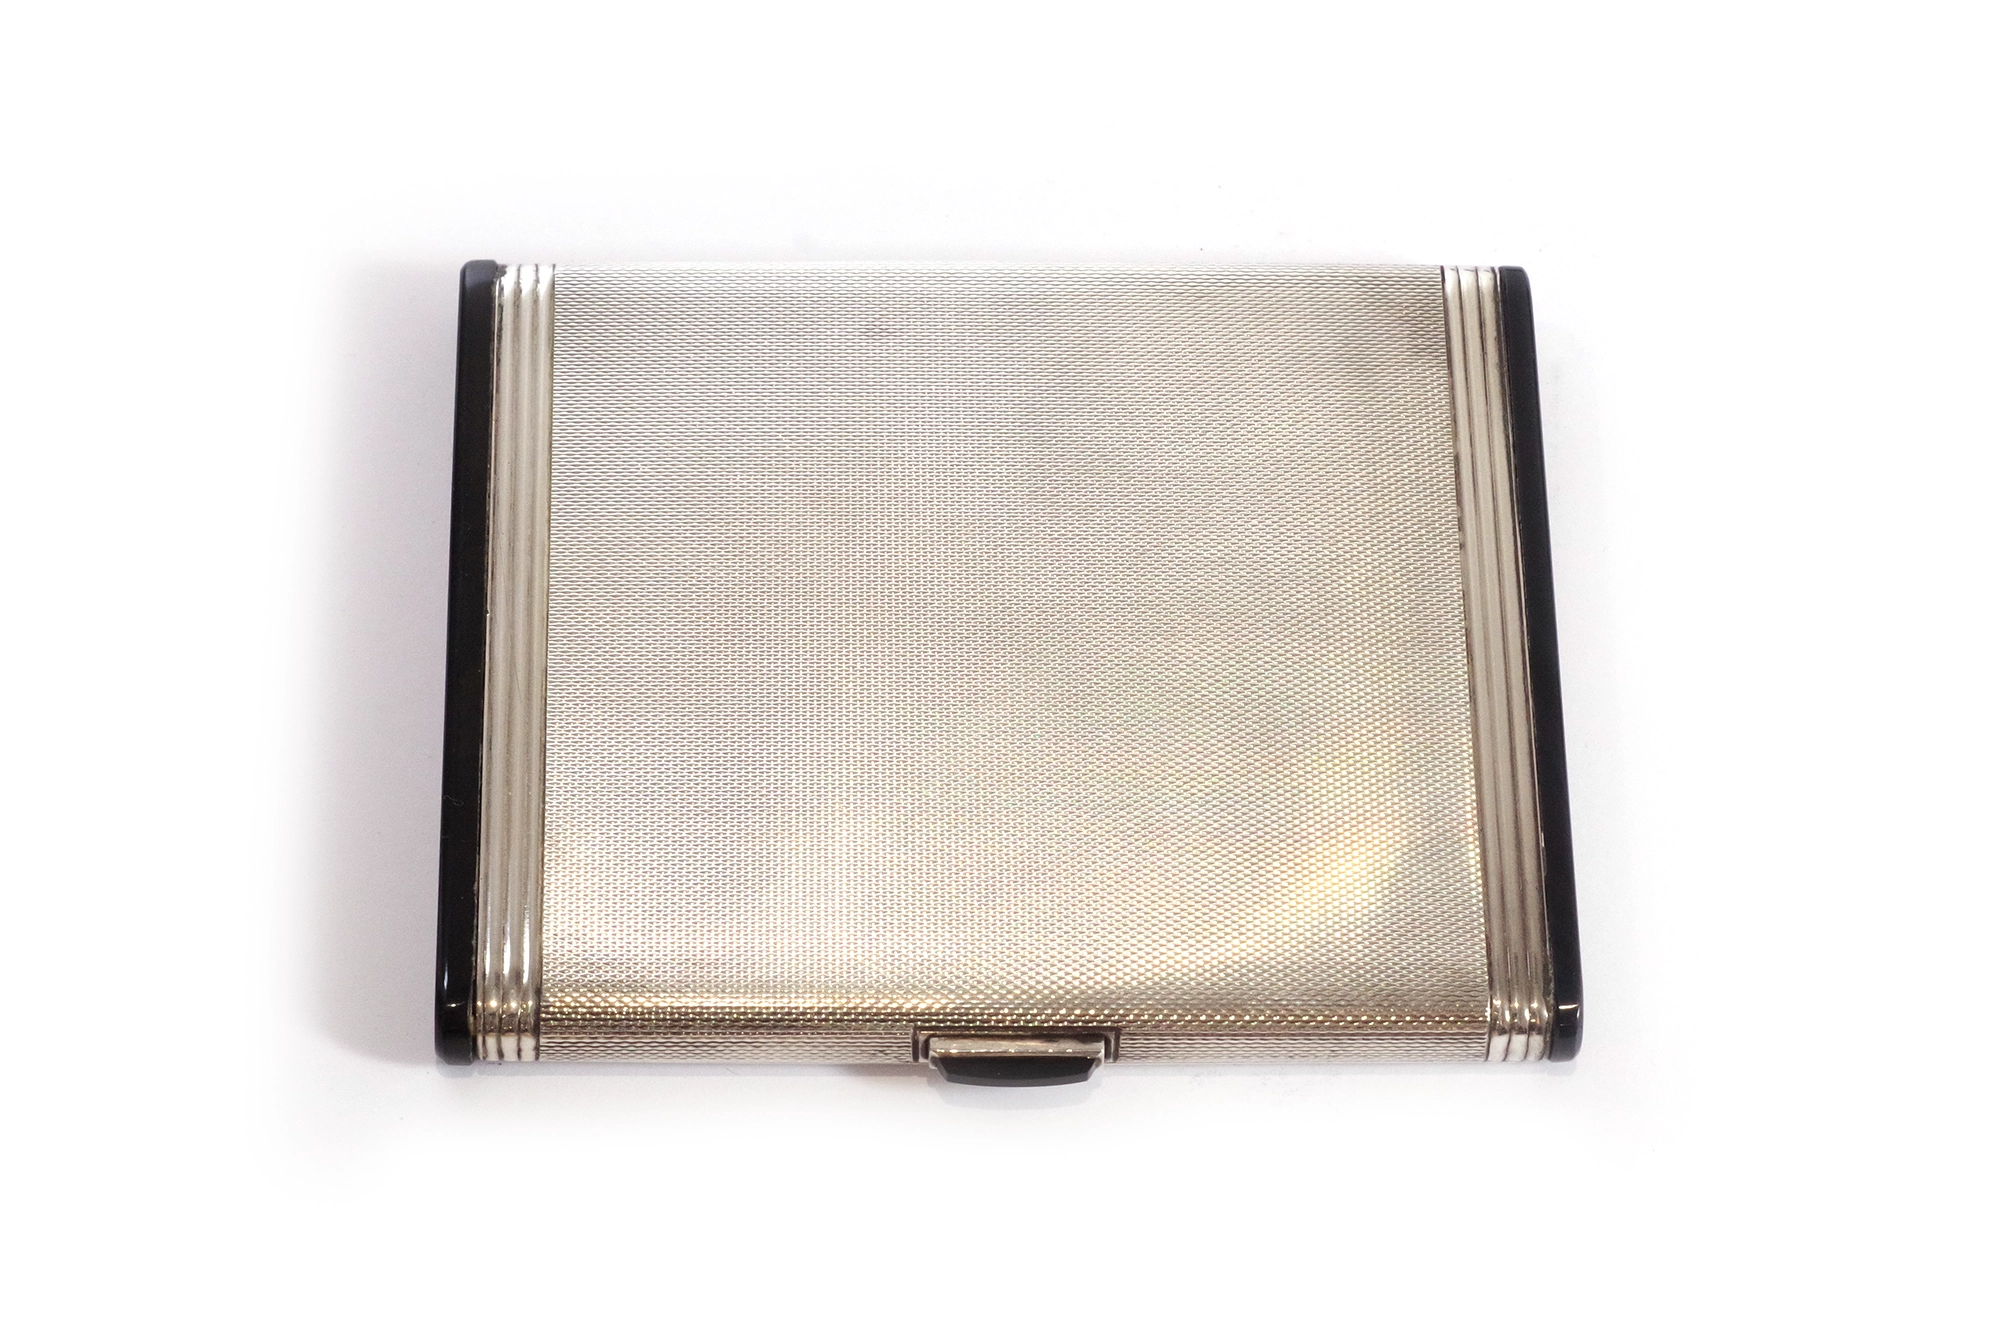 HERMES Casual Style Unisex Plain Leather Cigarette Case Accessories